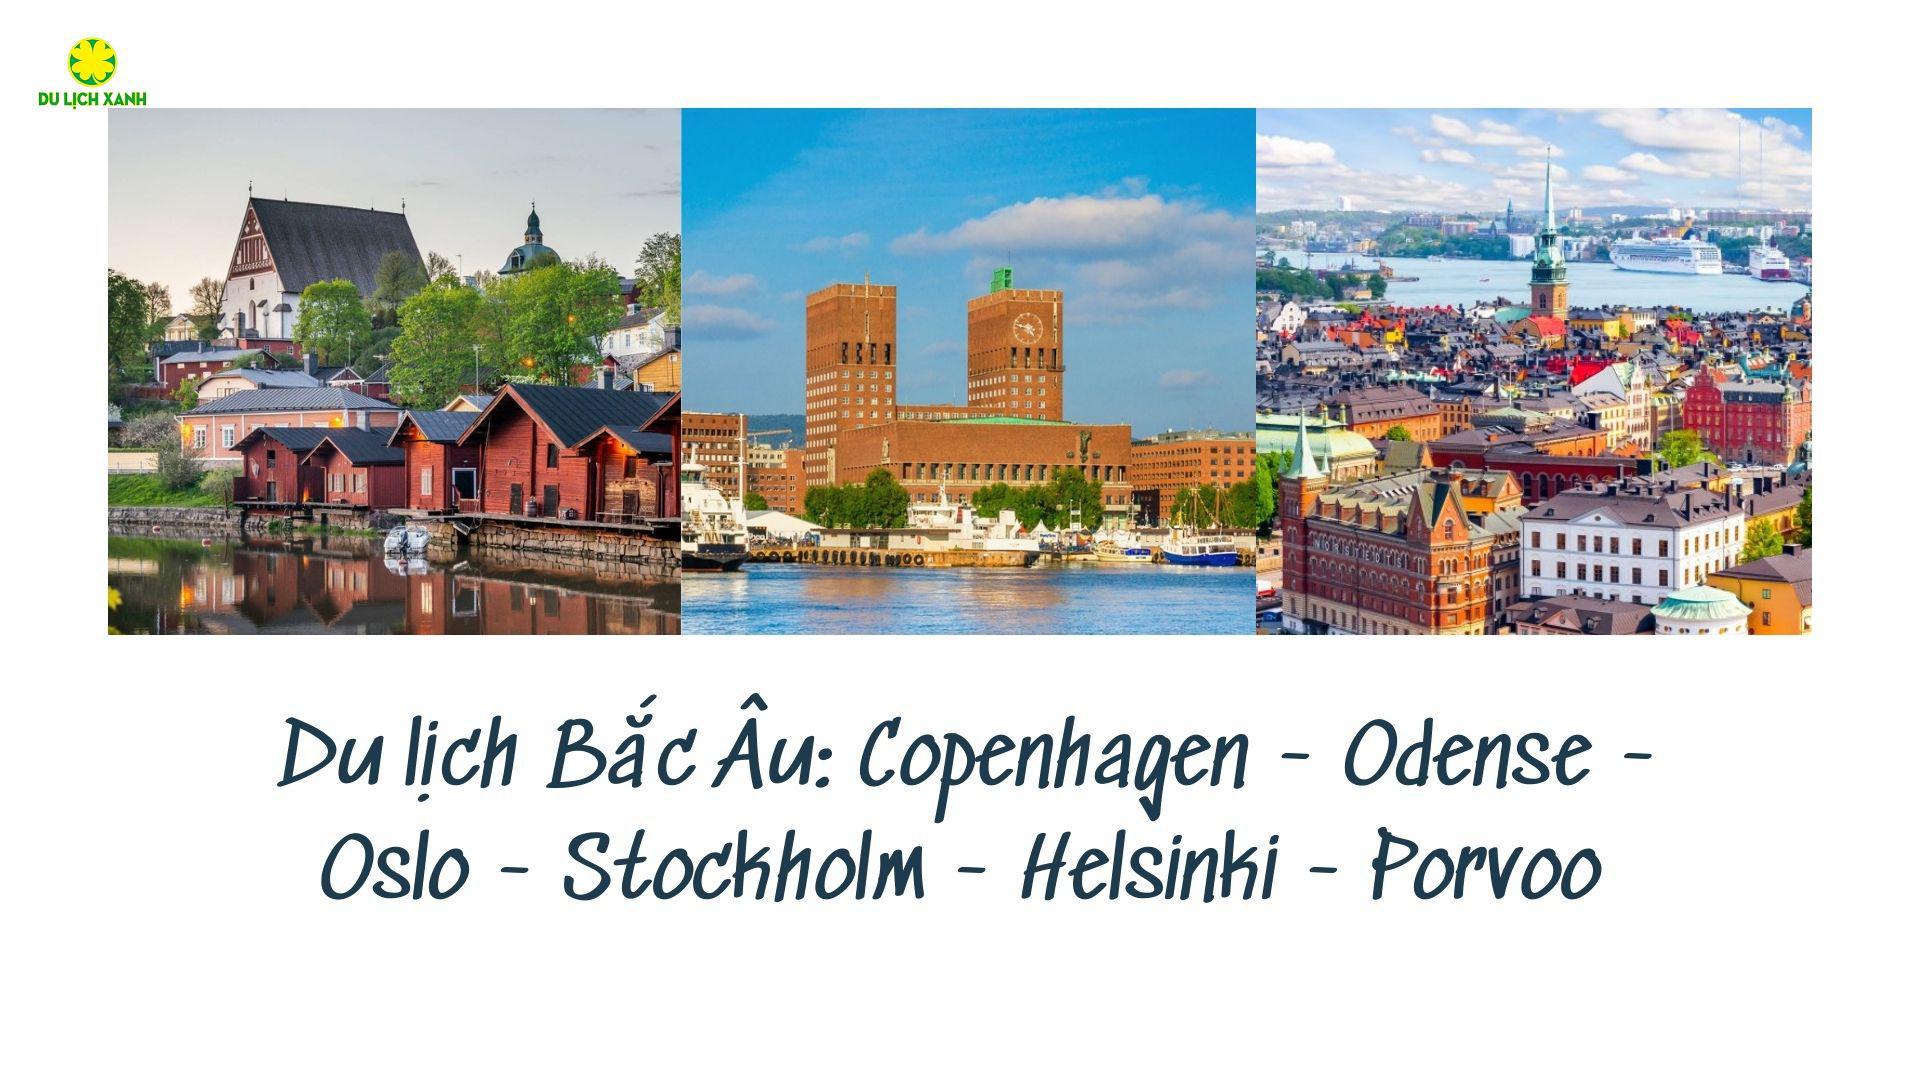 Du lịch Bắc Âu: Copenhagen - Odense - Oslo - Stockholm - Helsinki - Porvoo